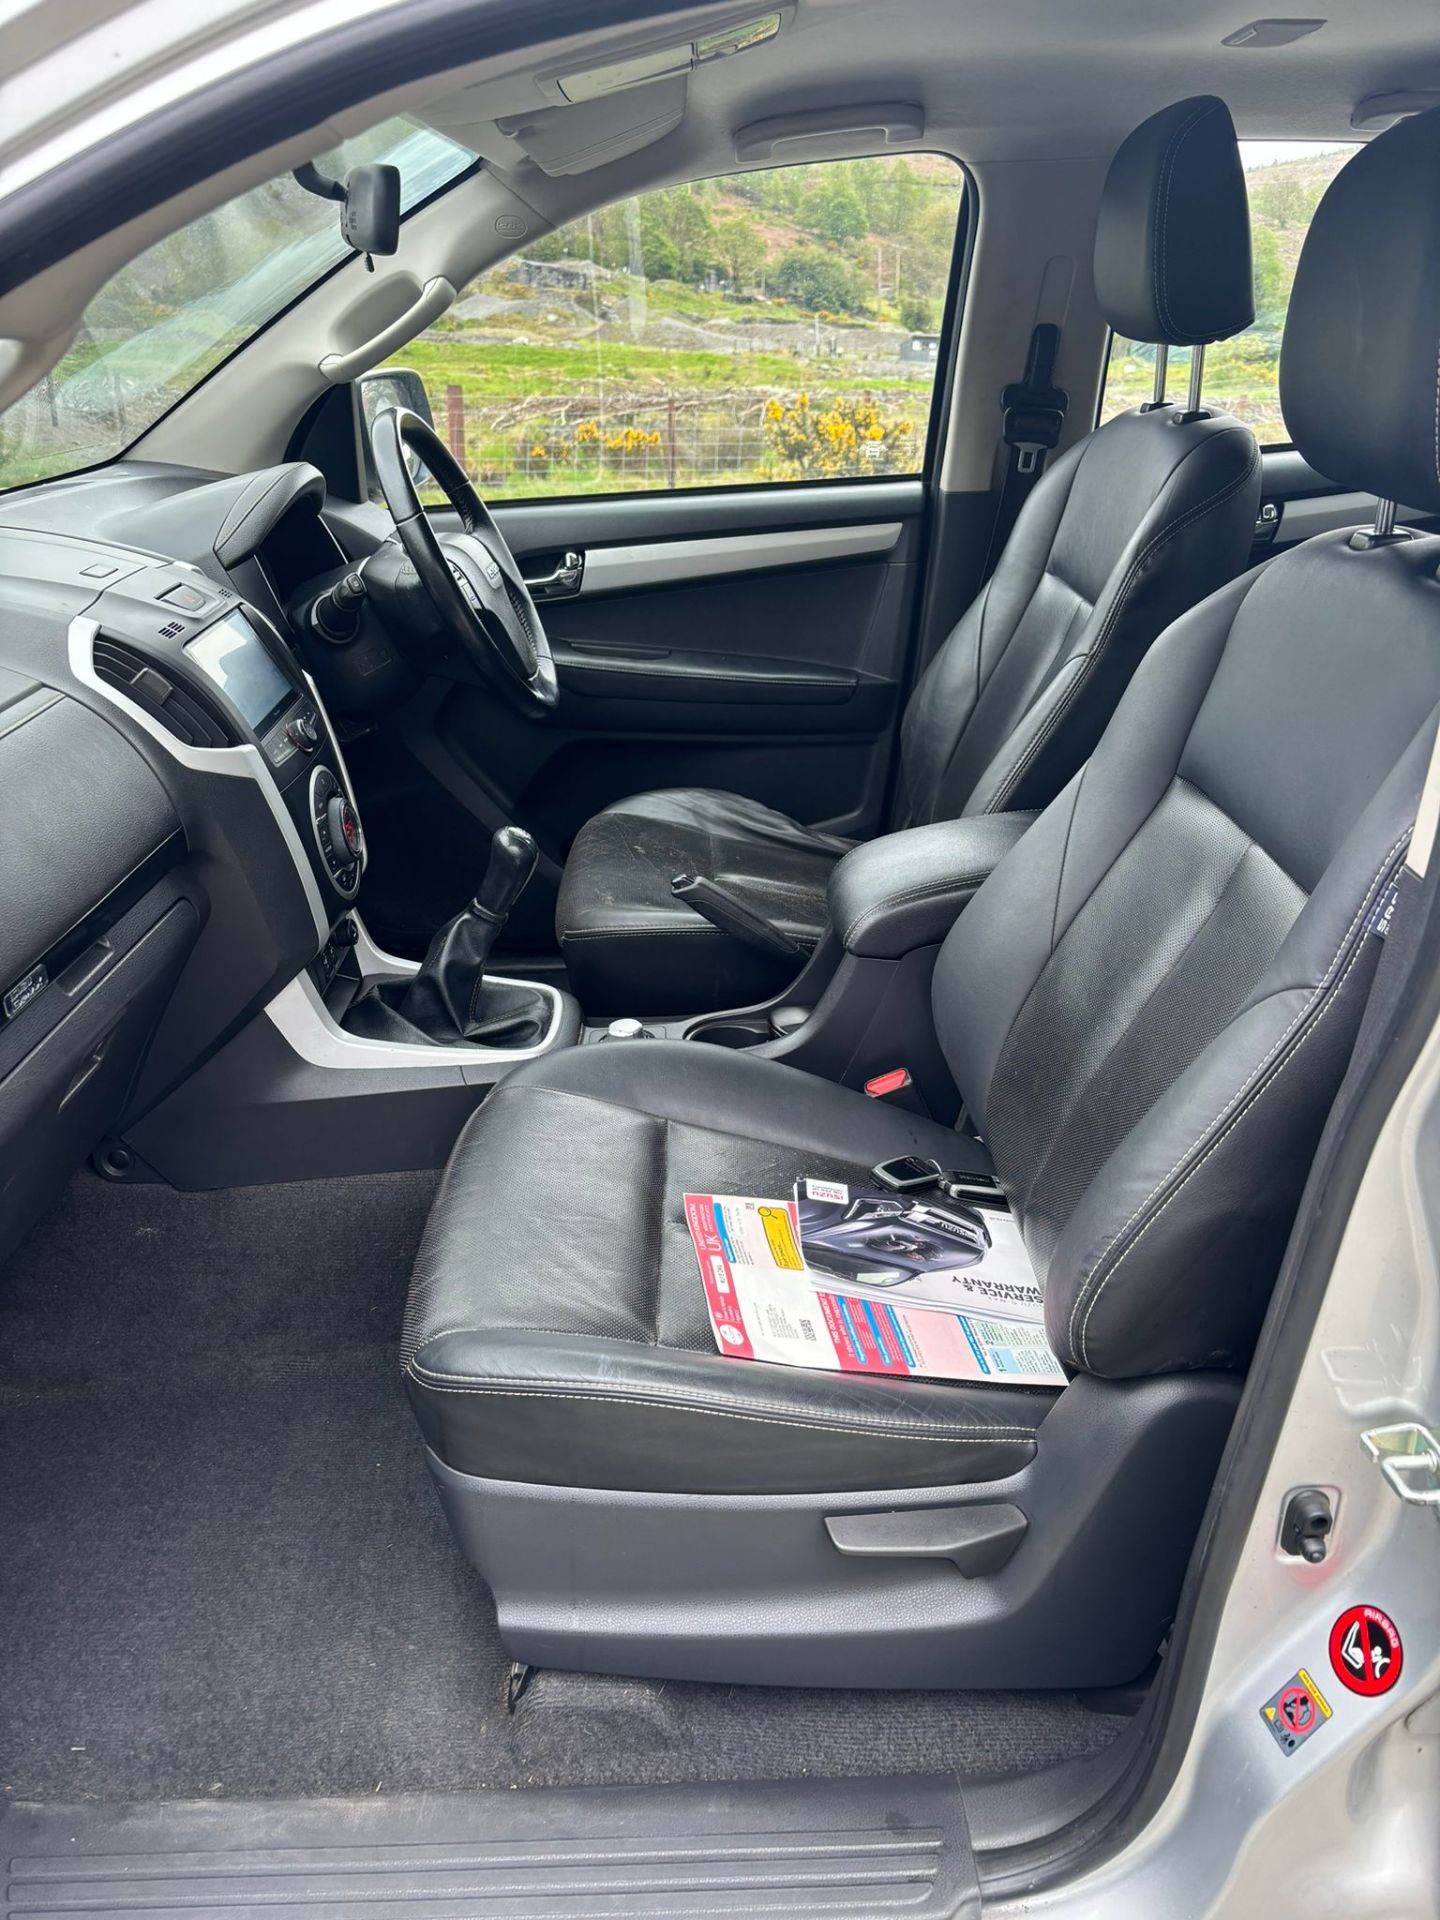 2019 ISUZU D-MAX DOUBLE CAB PICKUP TRUCK - Bild 11 aus 15